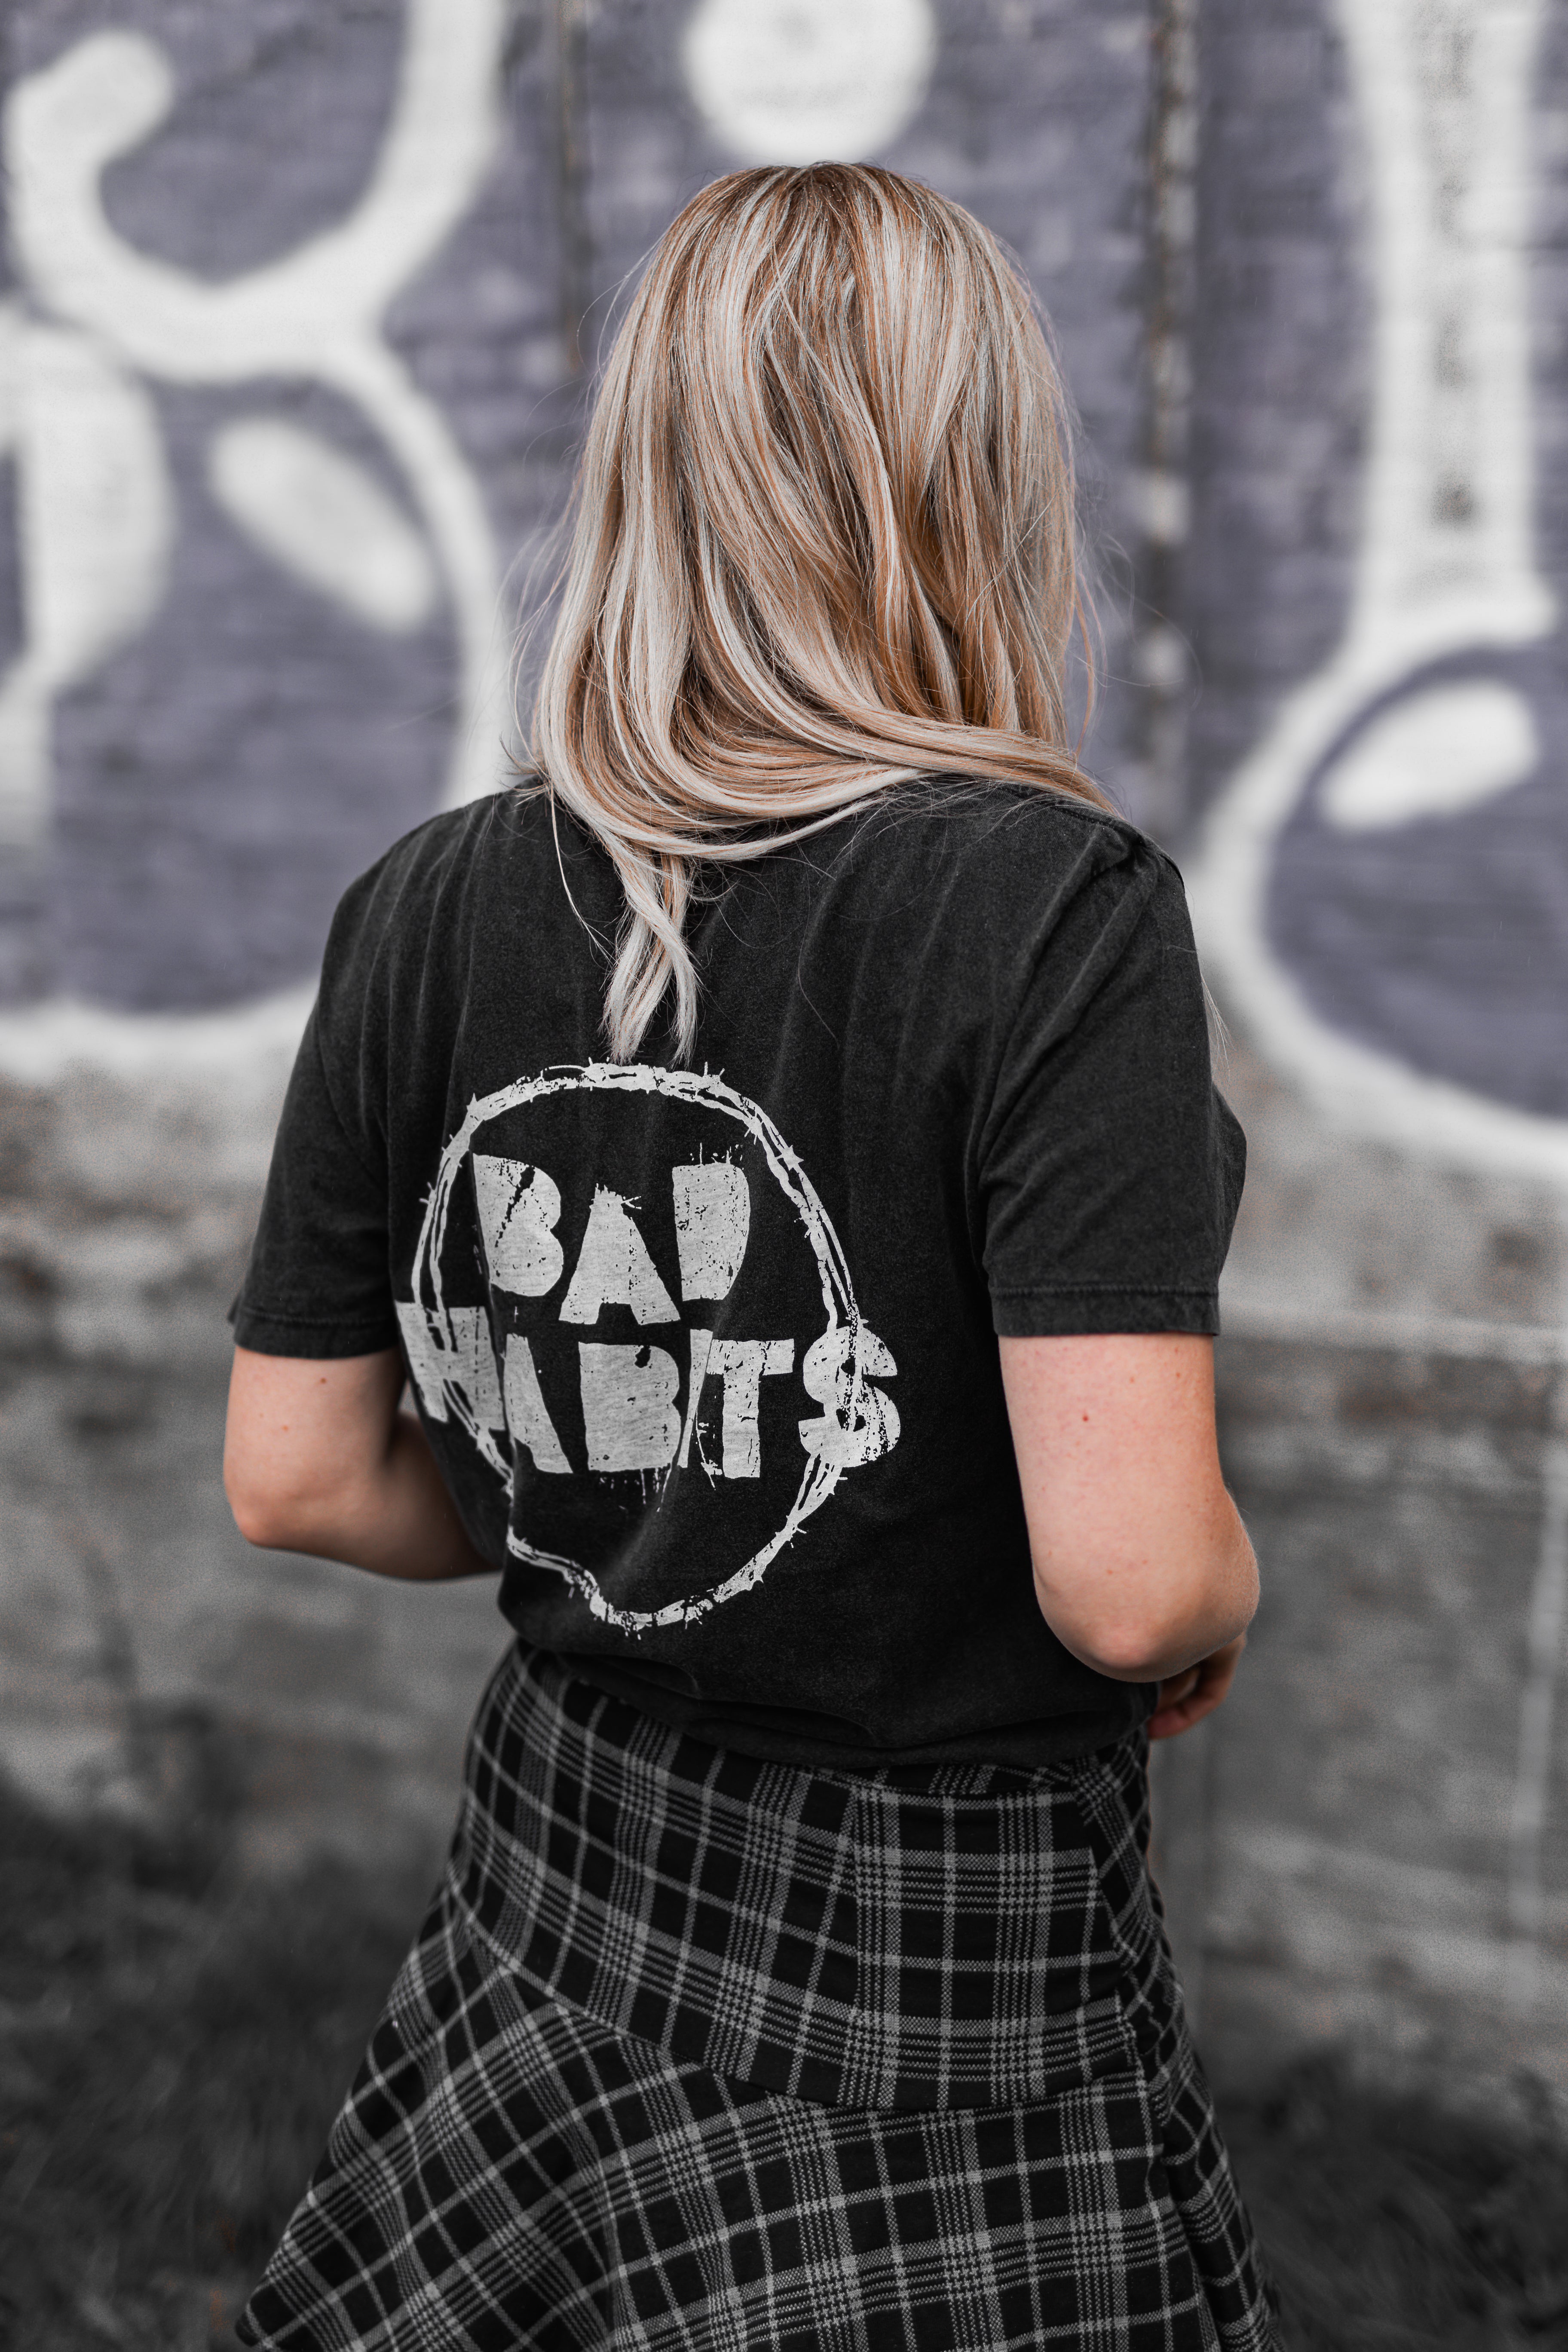 Dames t-shirt vintage zwart met tekst good girl bad habits